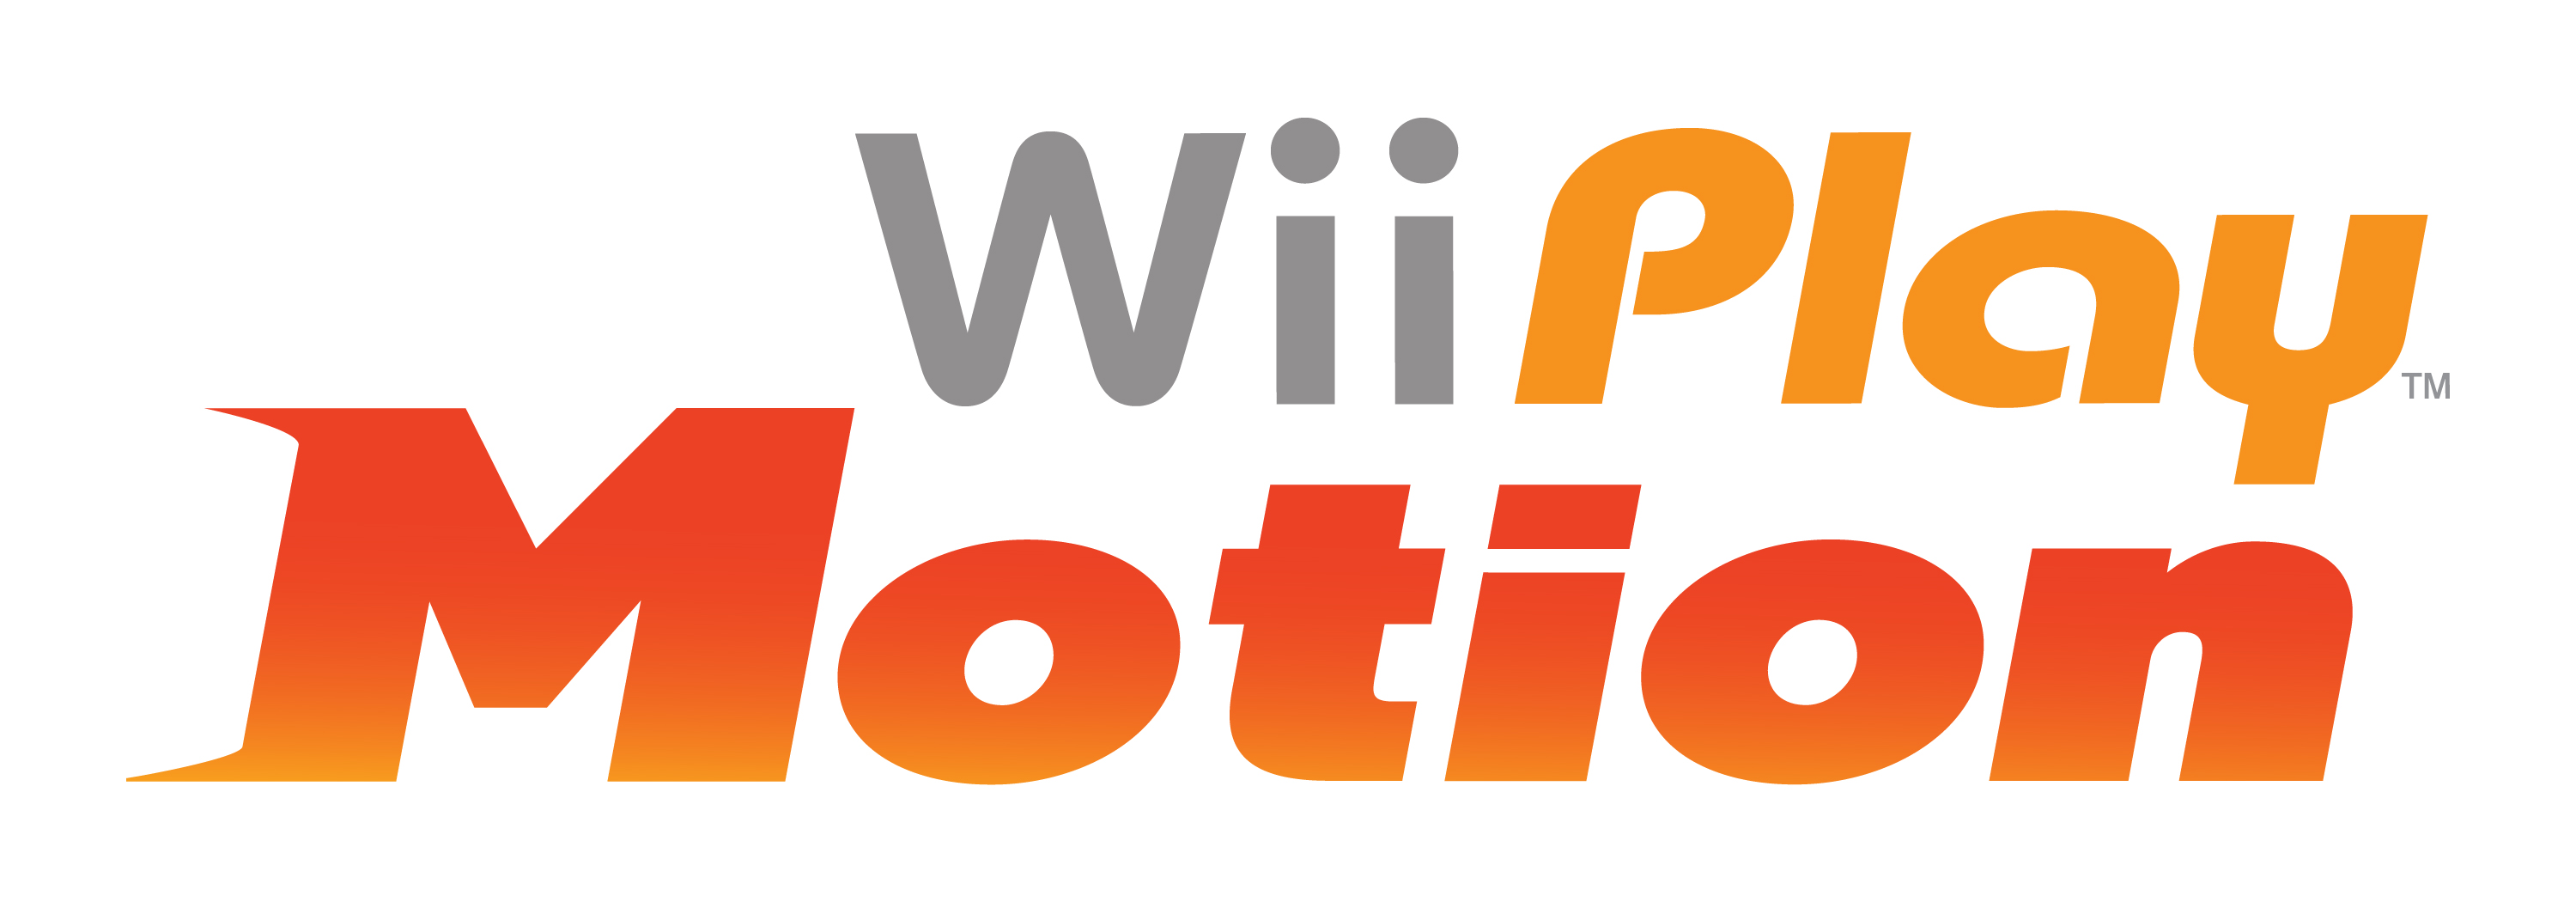 Wii Play Logo photo - 1